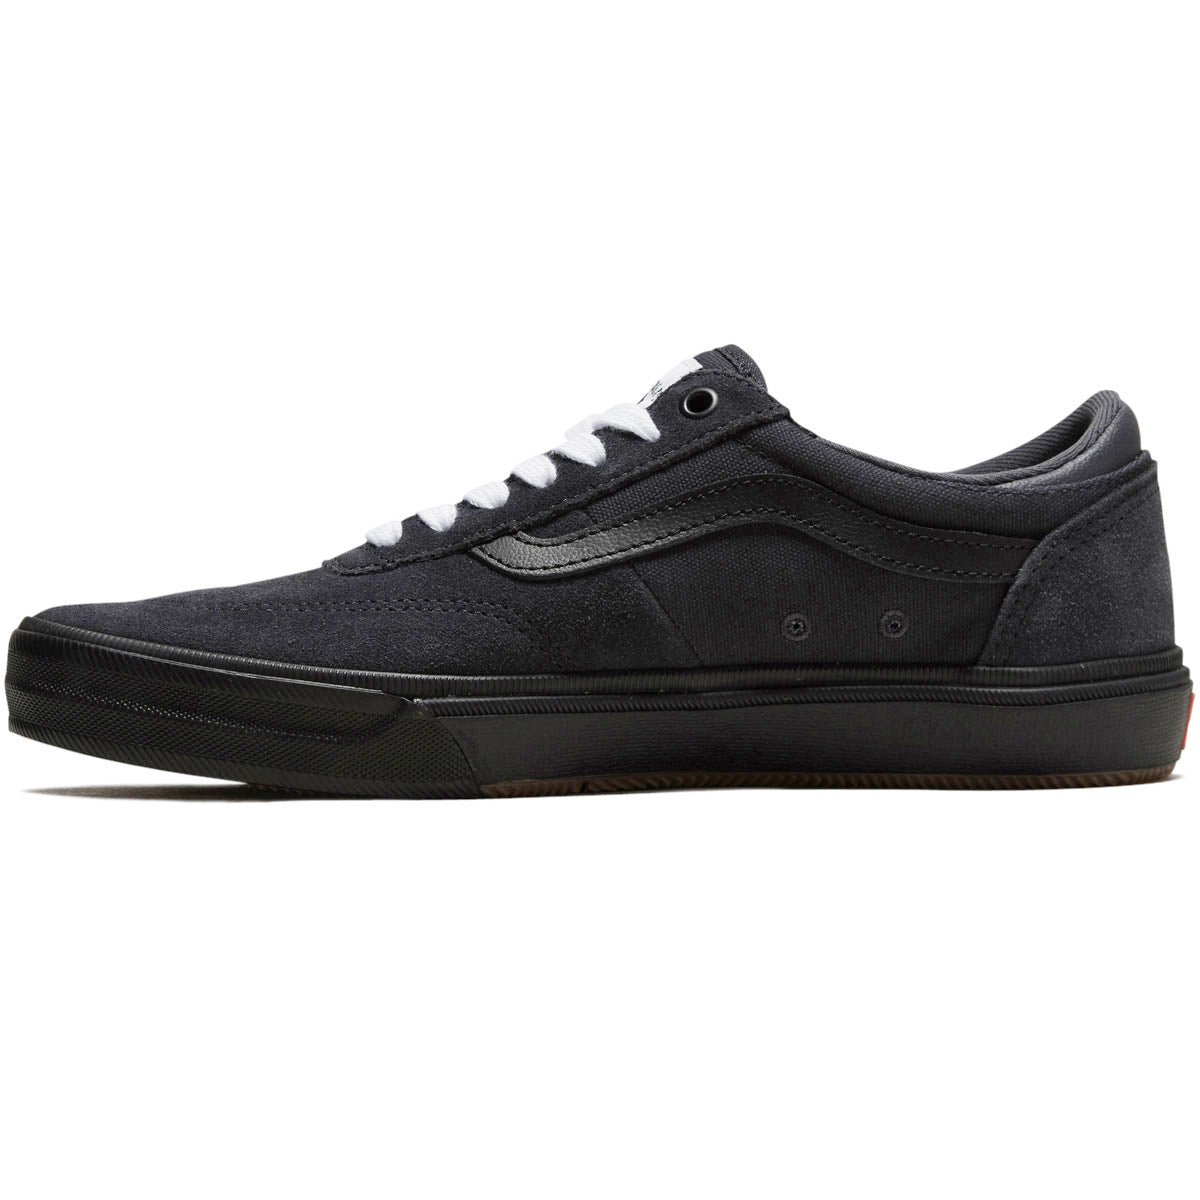 Vans Gilbert Crockett Shoes - Dark Navy image 2